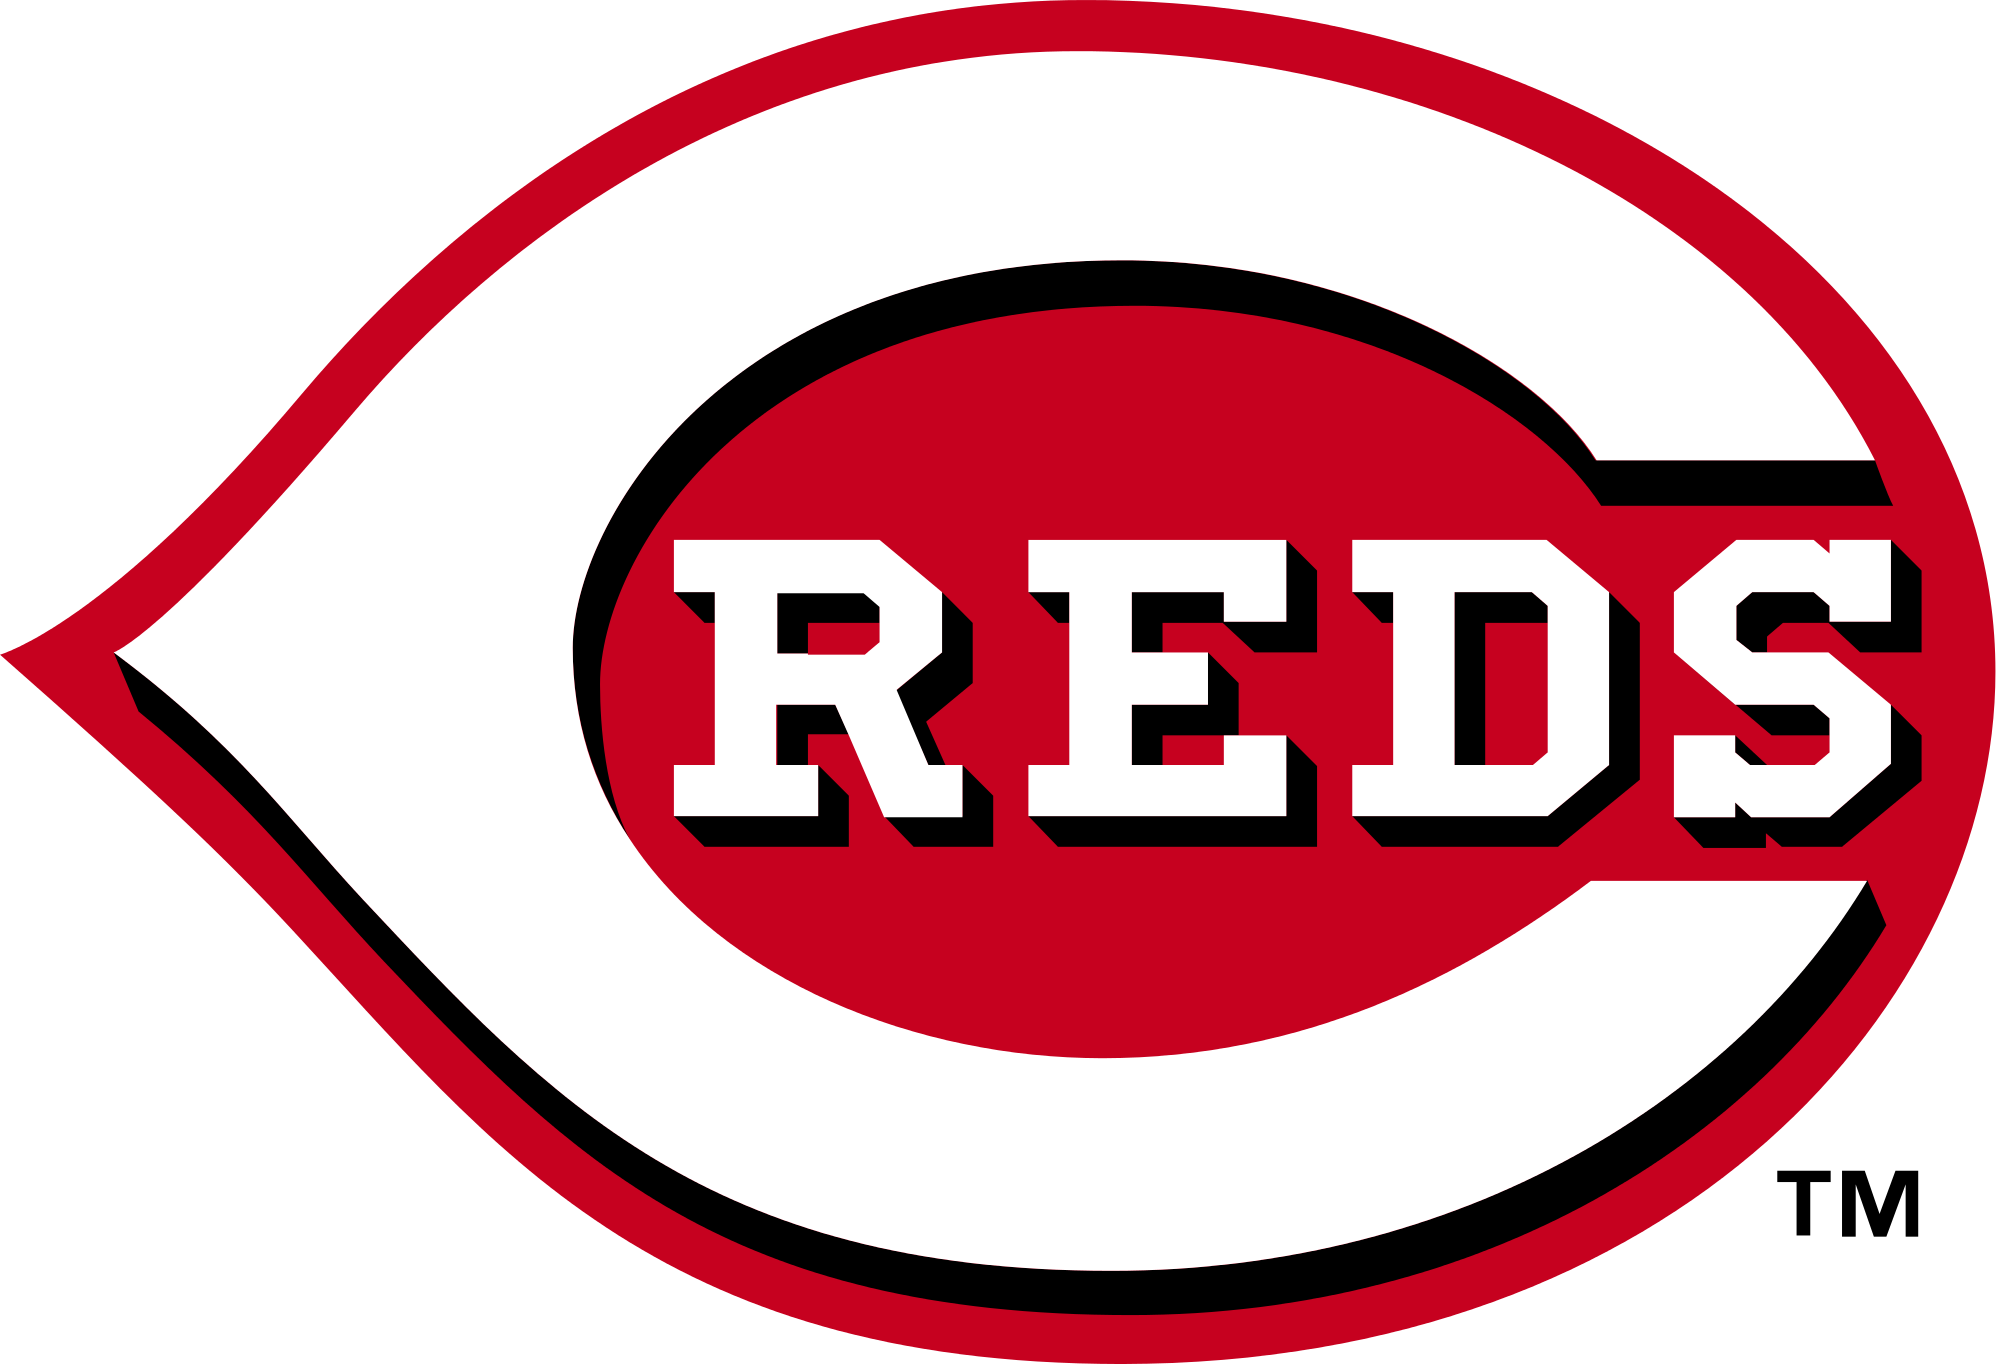 P&G MLB Cincinnati Reds Youth Academy